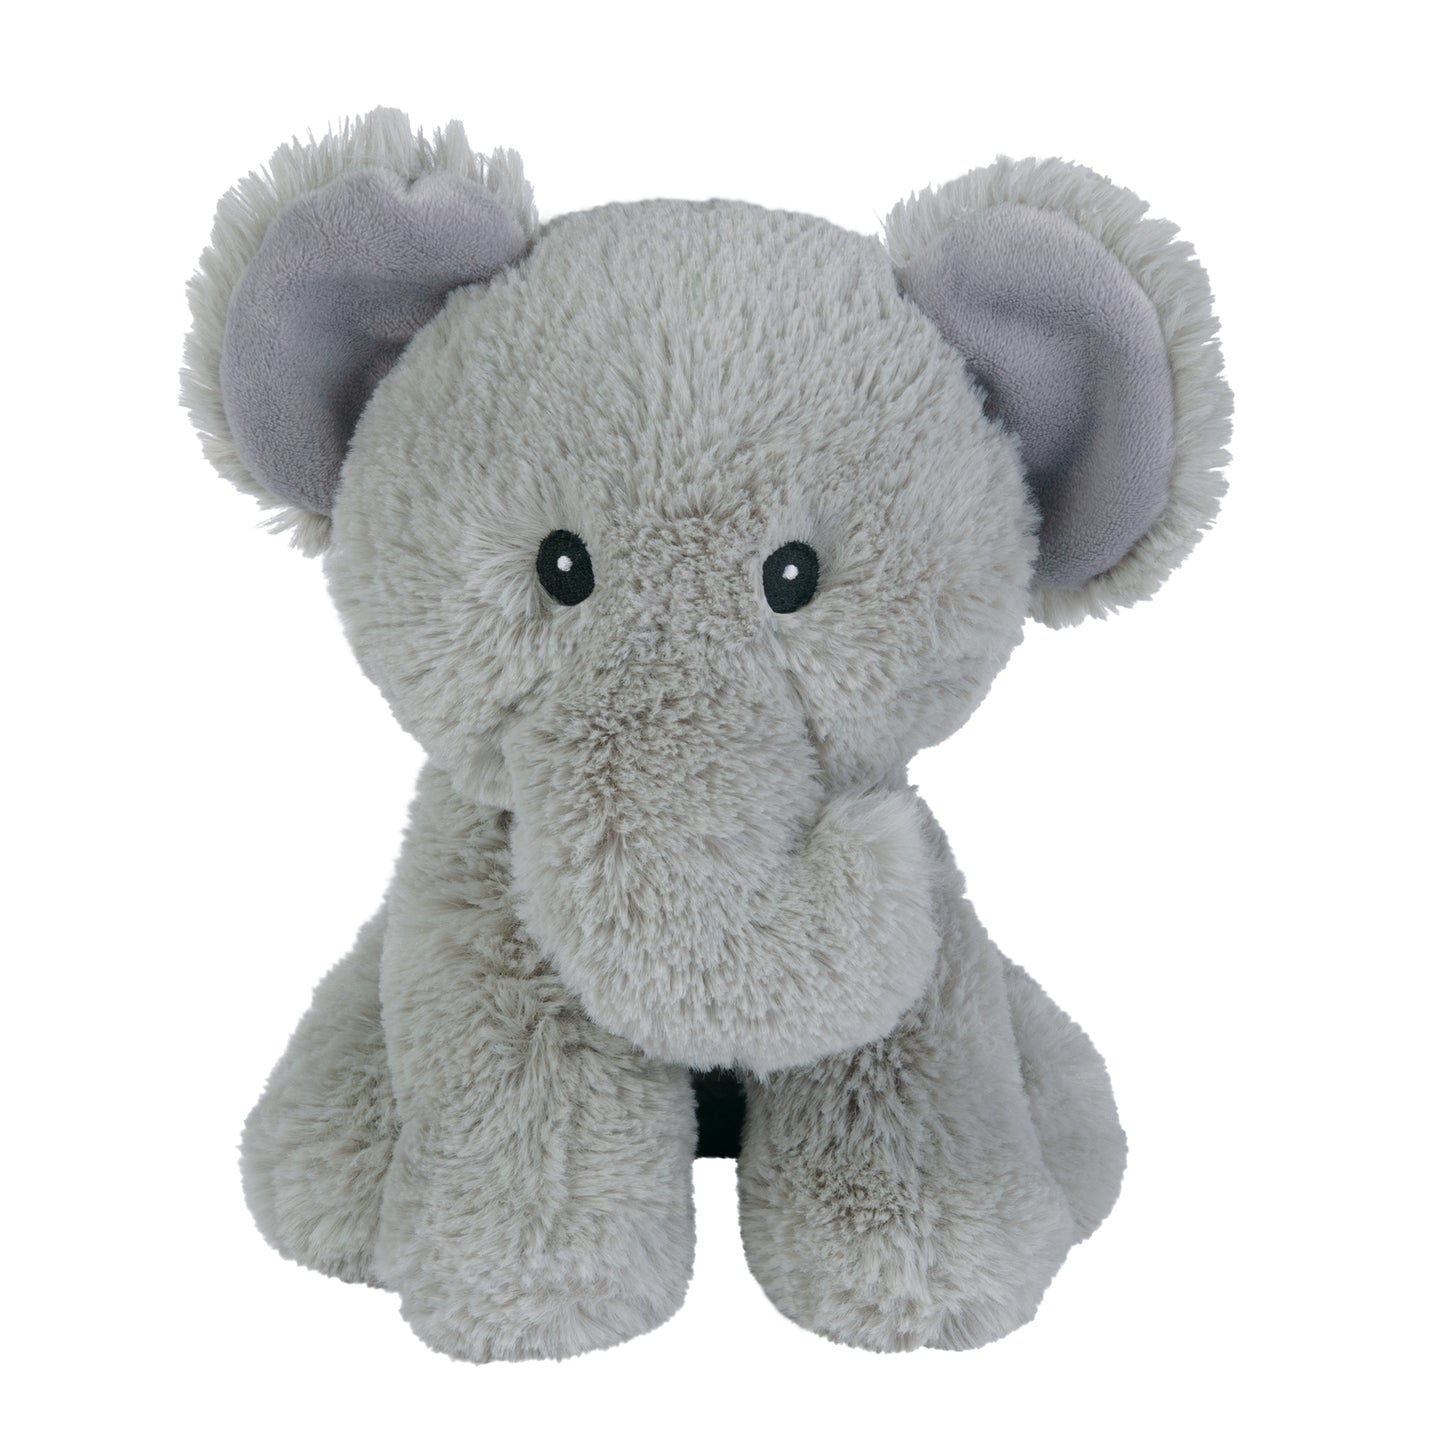  Elephant Garden 4 Piece Crib Bedding Set by Sammy & Lou®; elephant plush toy front view